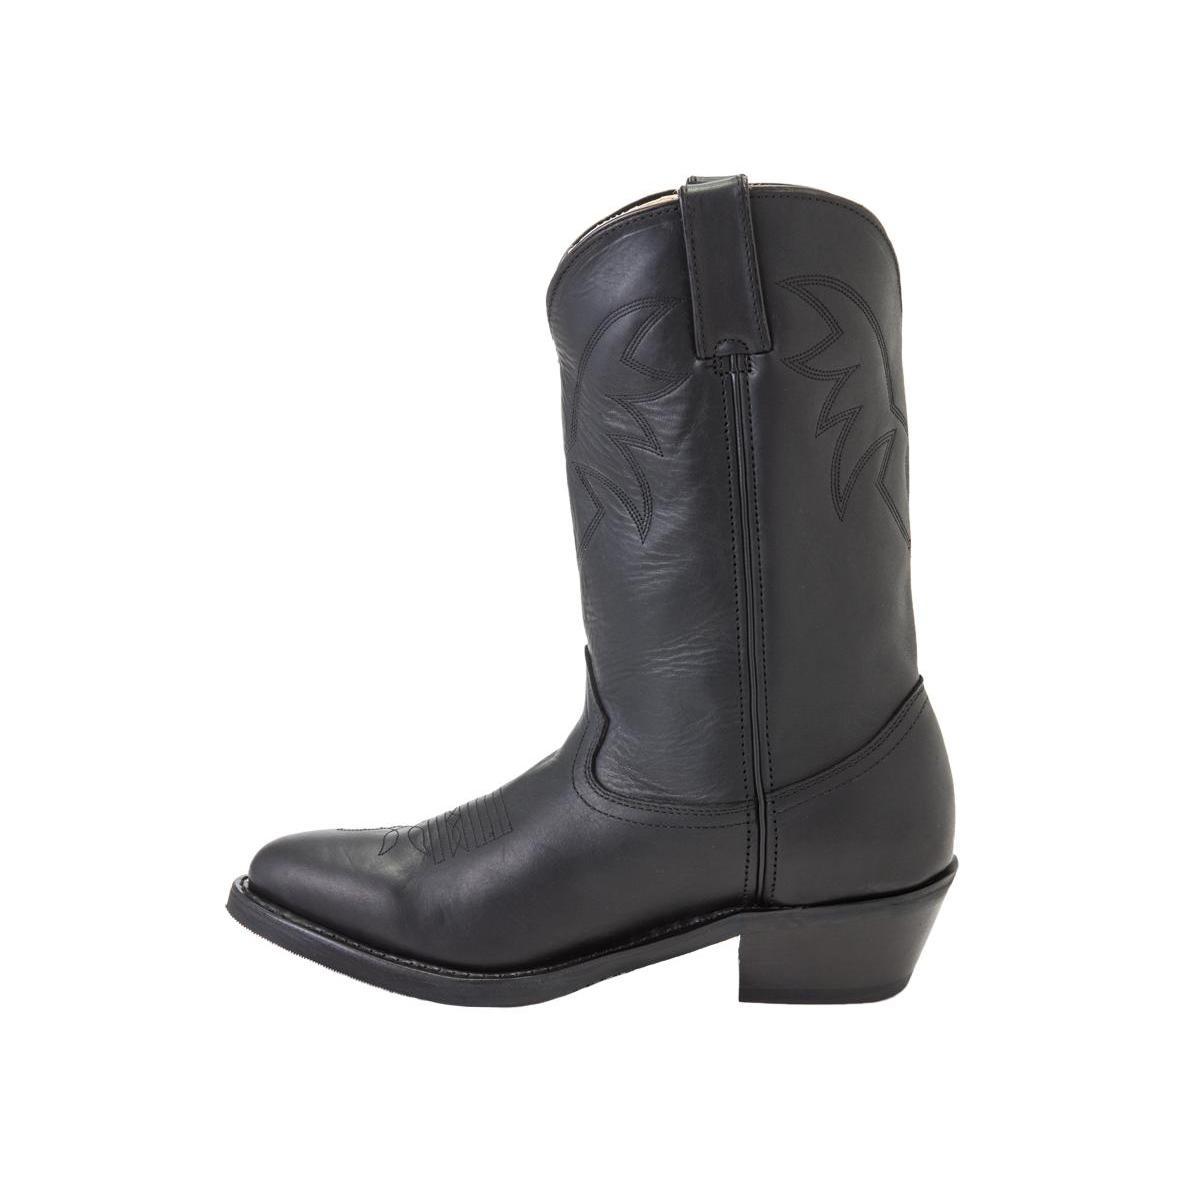 Durango: Men's Oiled Black Leather Comfort Western Boots